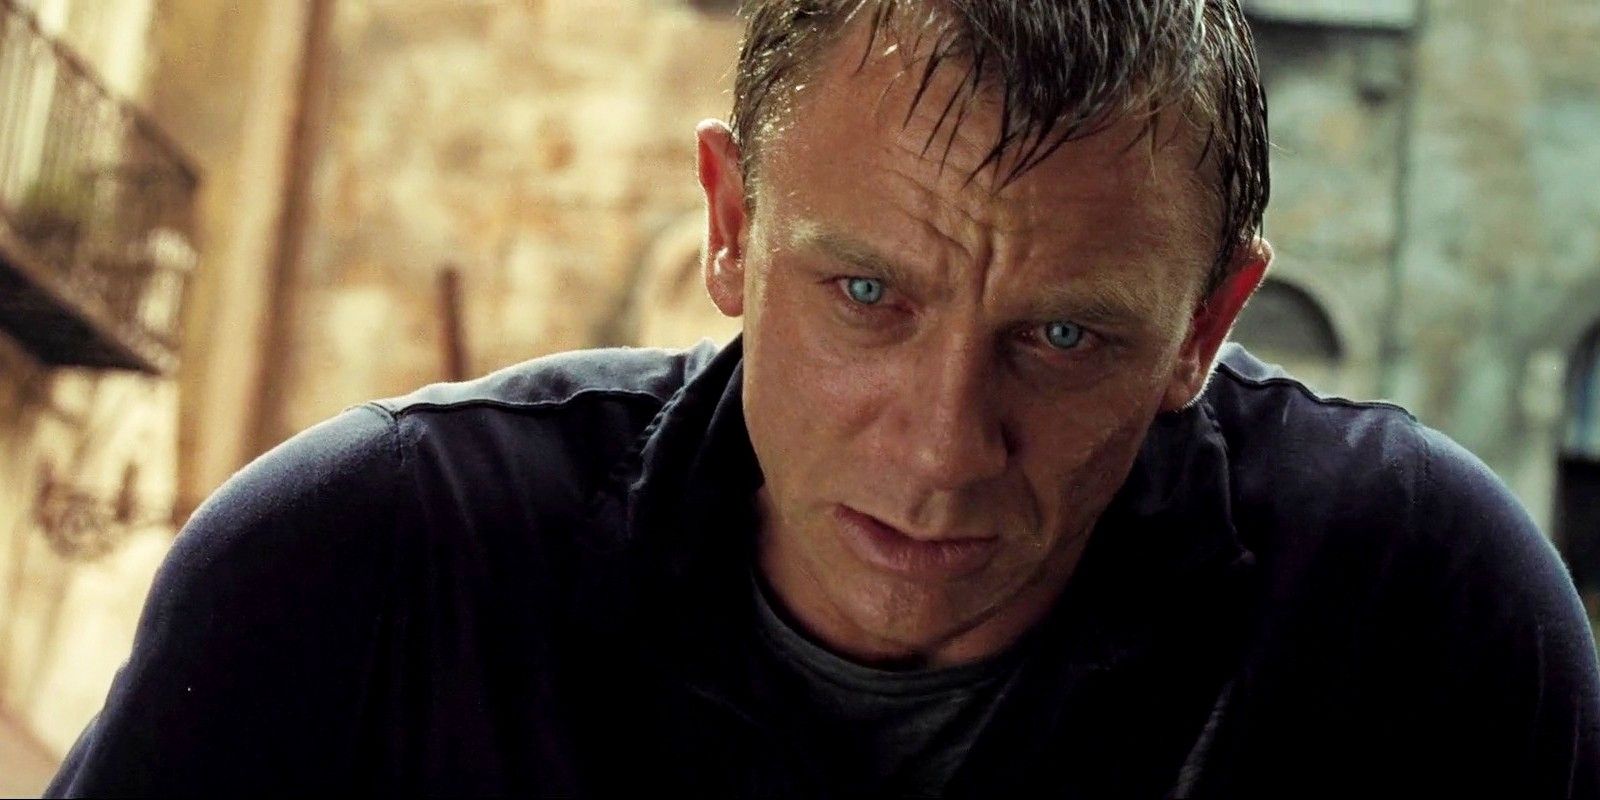 Daniel Craig as Bond in Casino Royale 2006